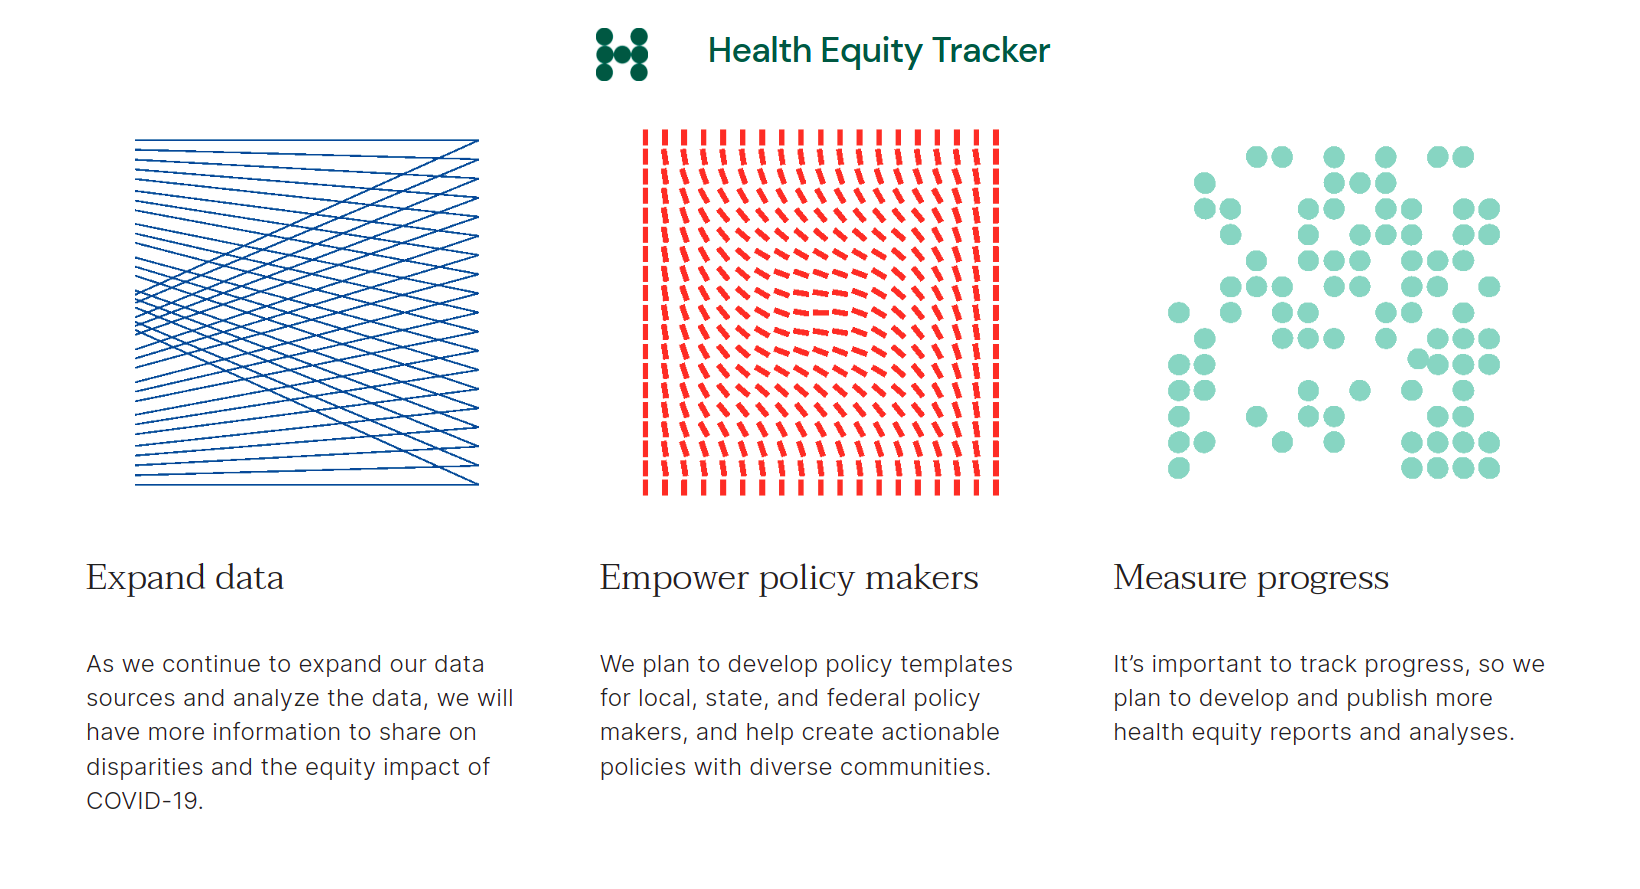 Health equity tracker goals